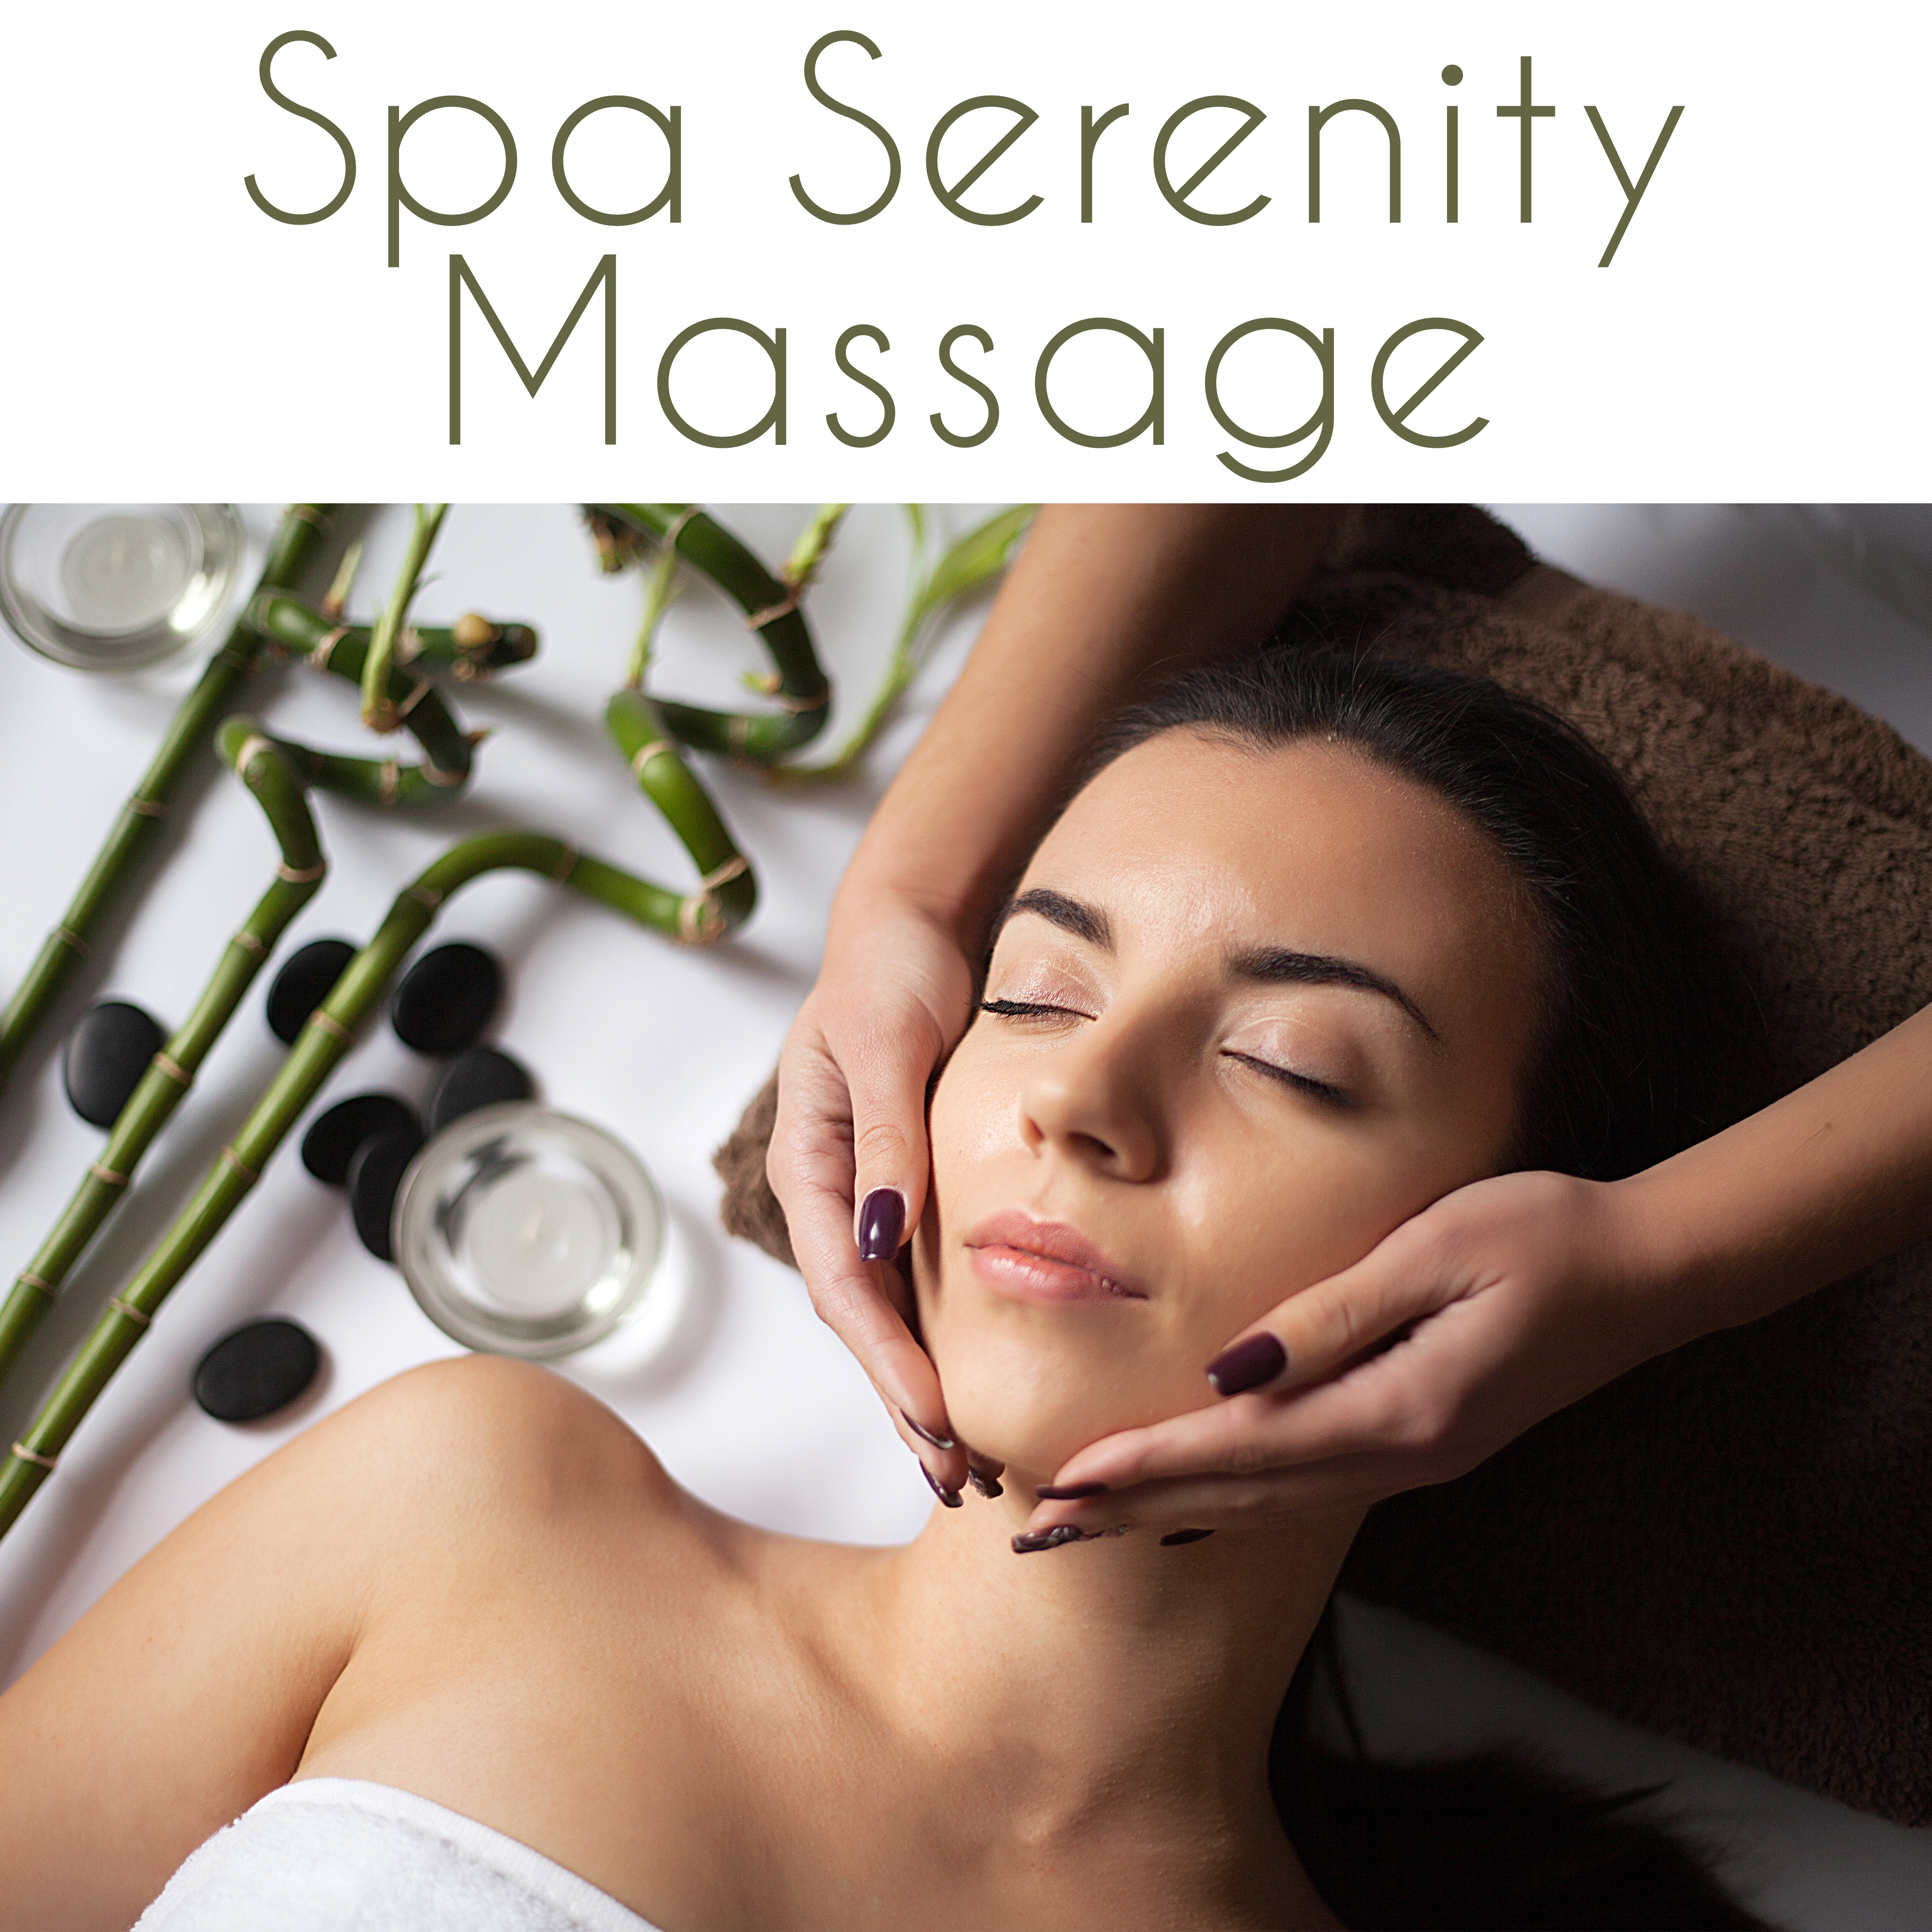 Spa Serenity Massage